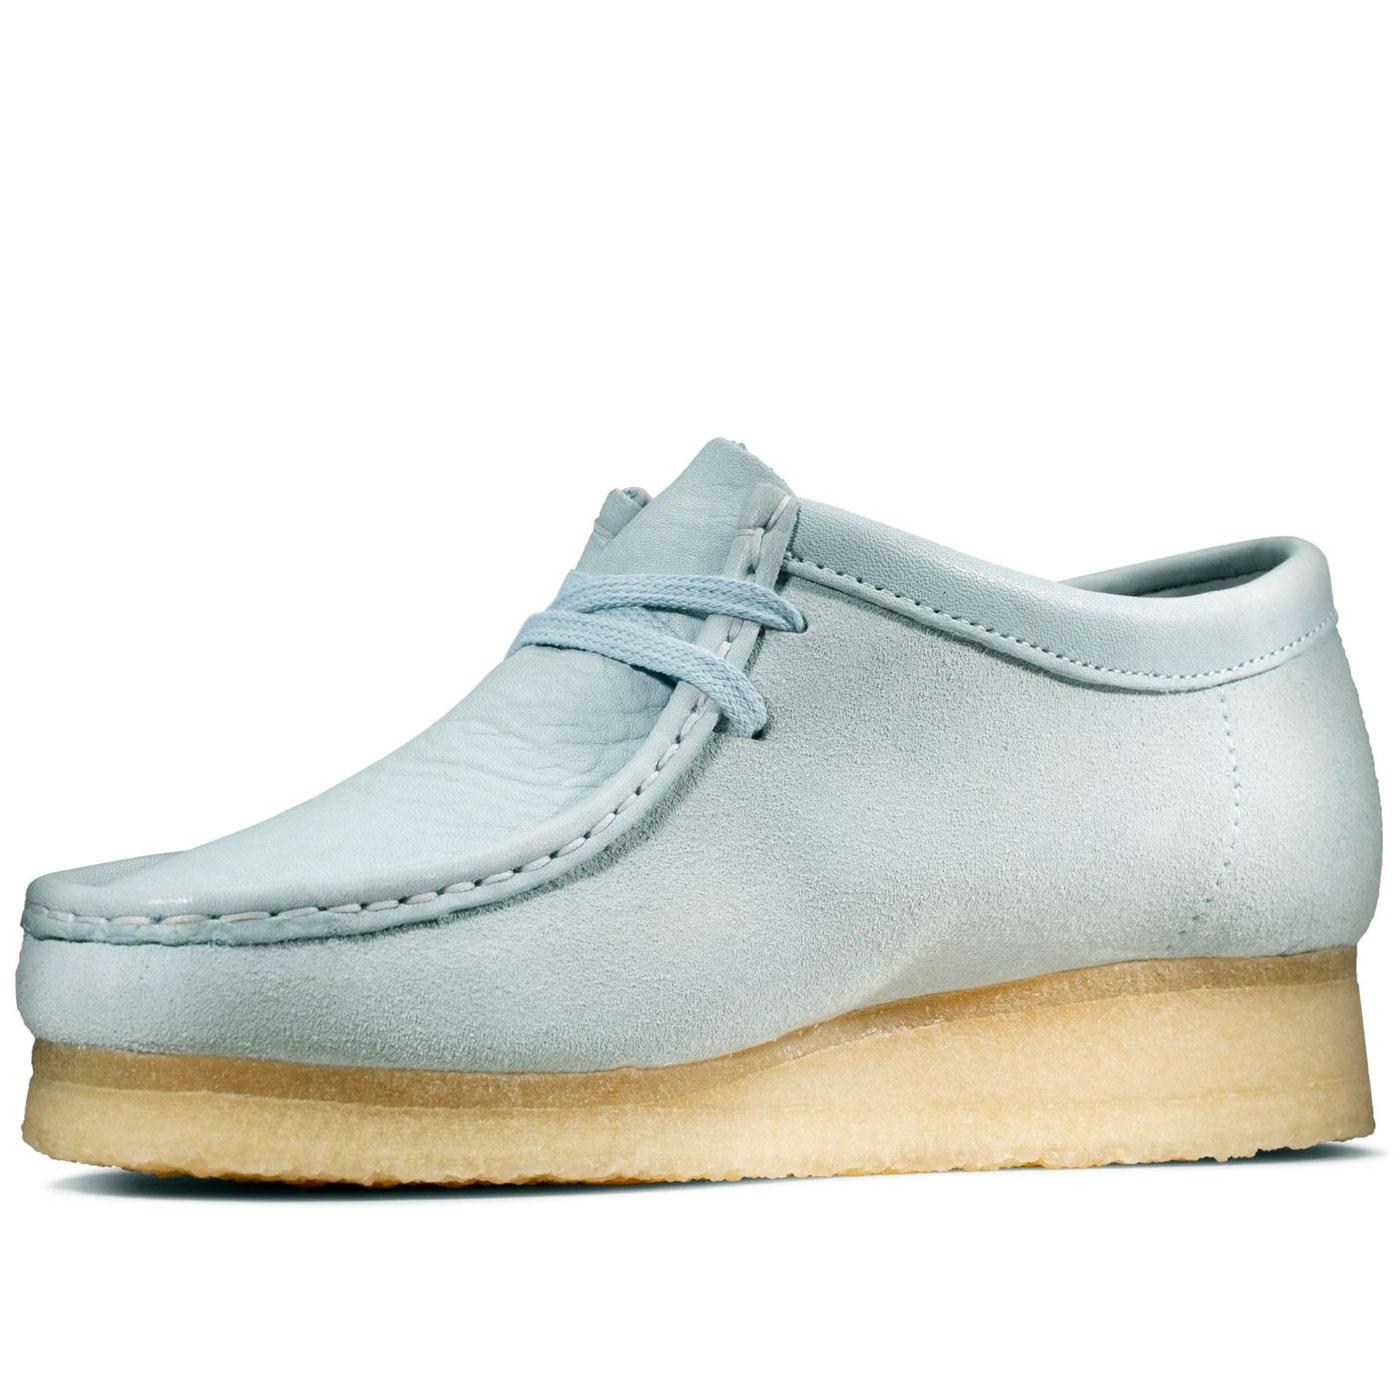 CLARKS Wallabee Women's Light Blue Combi Suede Shoes